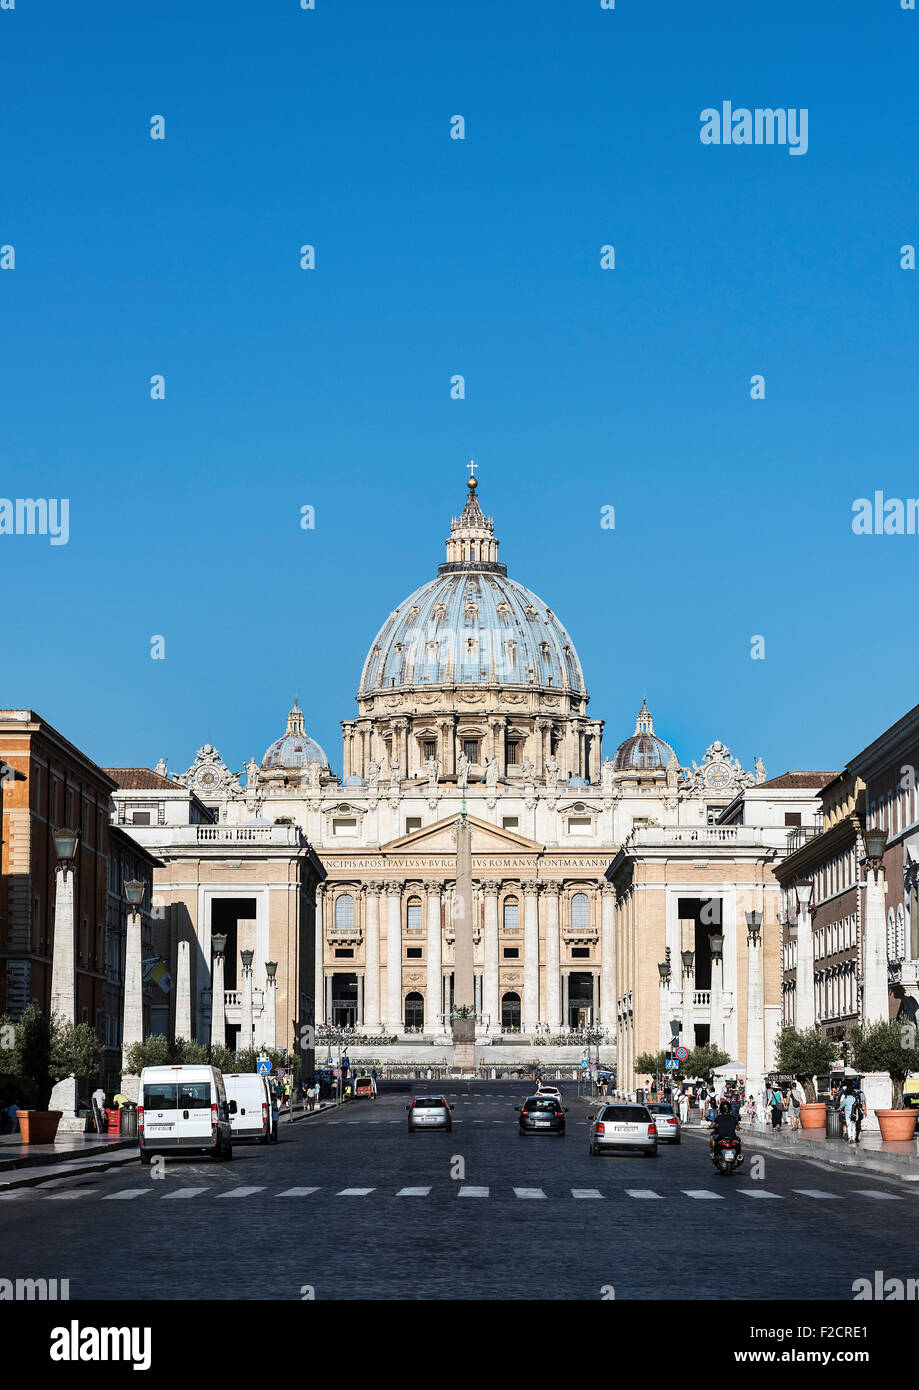 La Basilique St Pierre vu de la Via della Conciliazione, Rome, Italie Banque D'Images